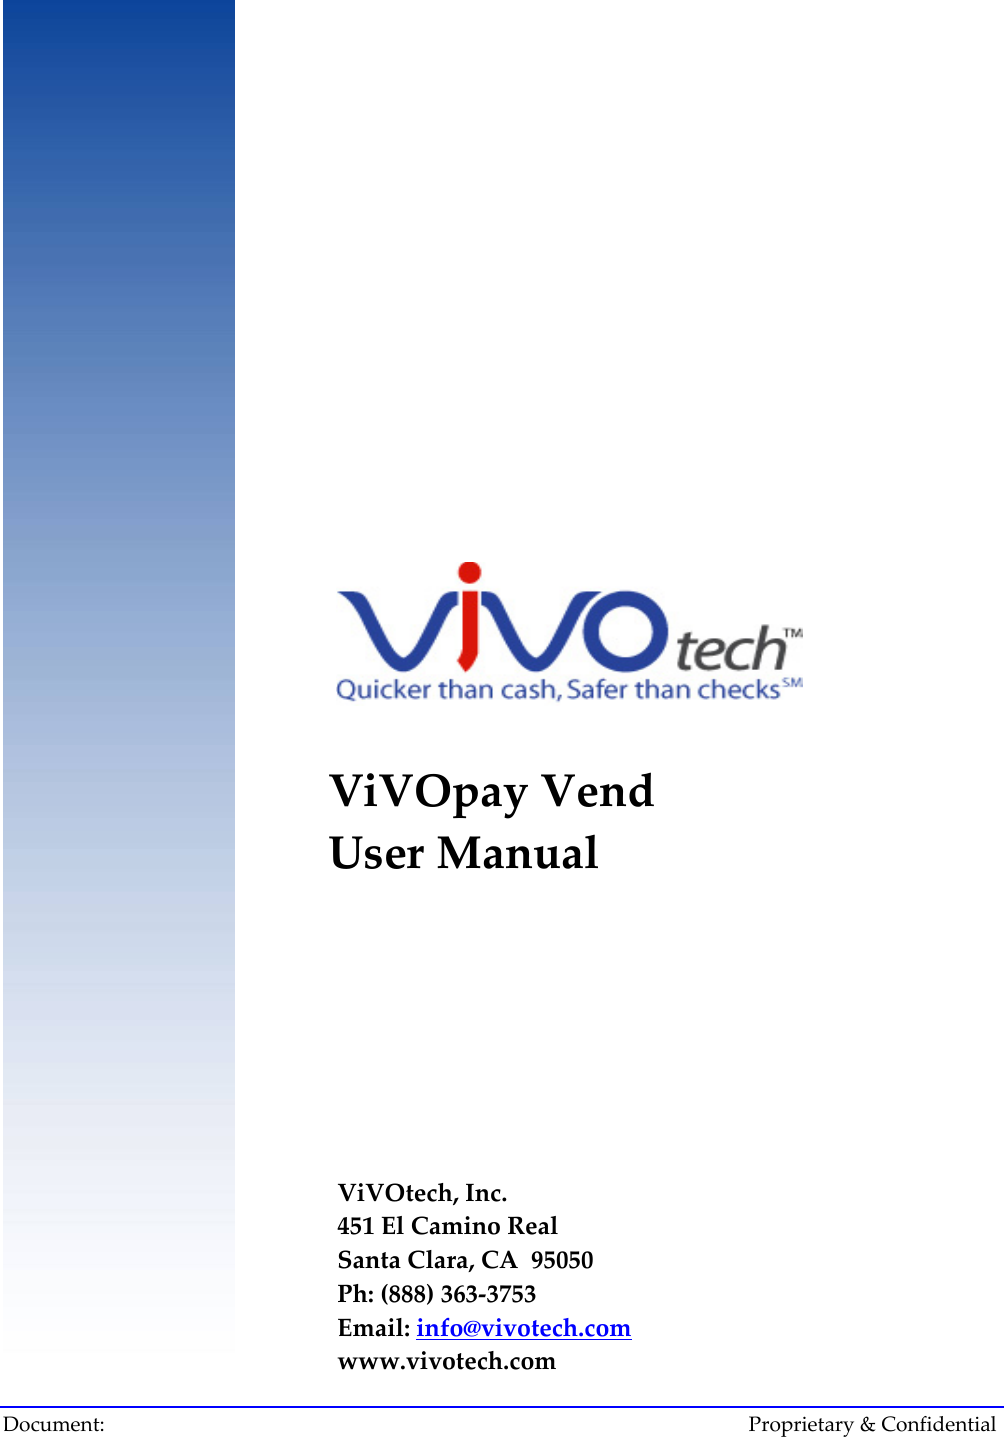                     ViVOpay Vend    User Manual          ViVOtech, Inc. 451 El Camino Real Santa Clara, CA  95050 Ph: (888) 363-3753 Email: info@vivotech.comwww.vivotech.comDocument:       &amp; Confidential    Proprietary